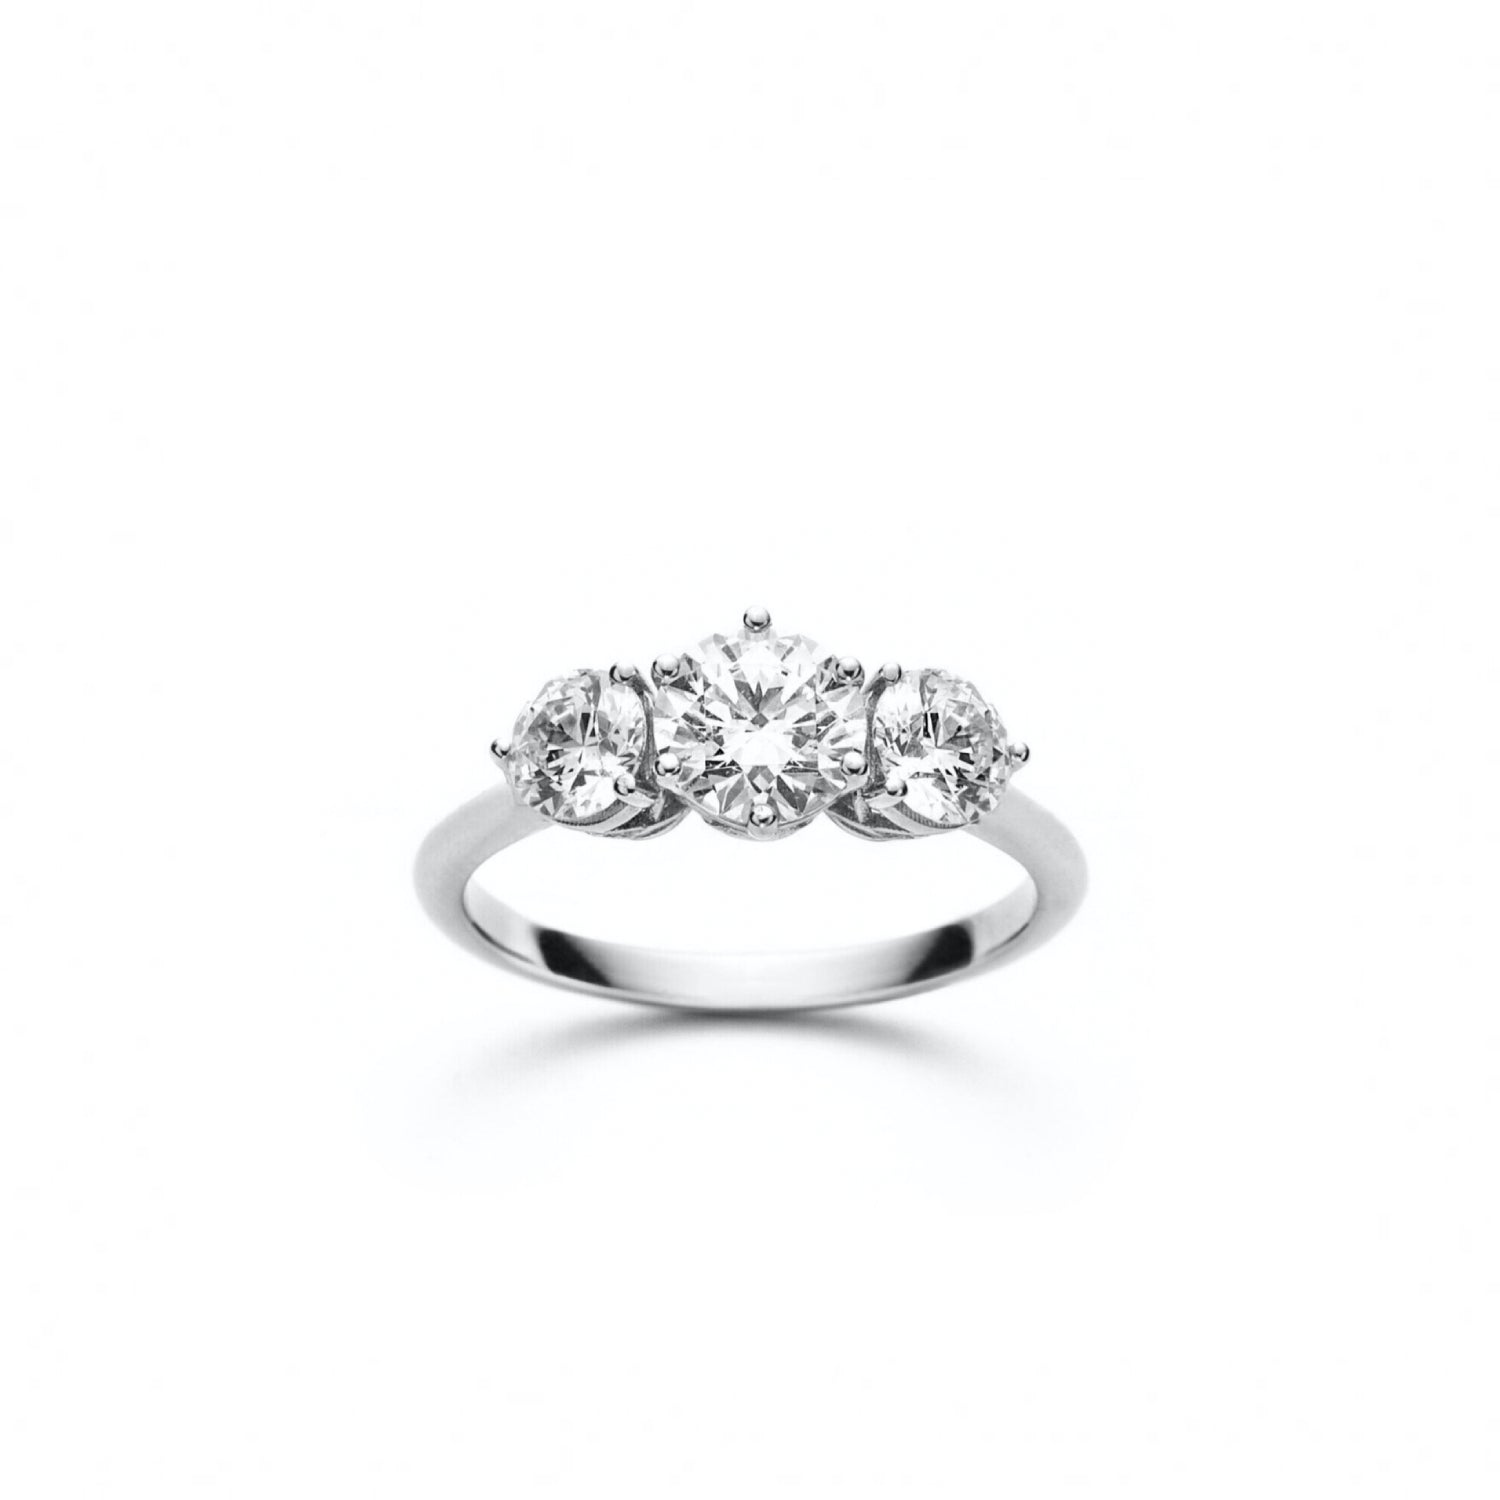 Round Brilliant Cut Diamond Three-Stone Engagement Ring in White Gold